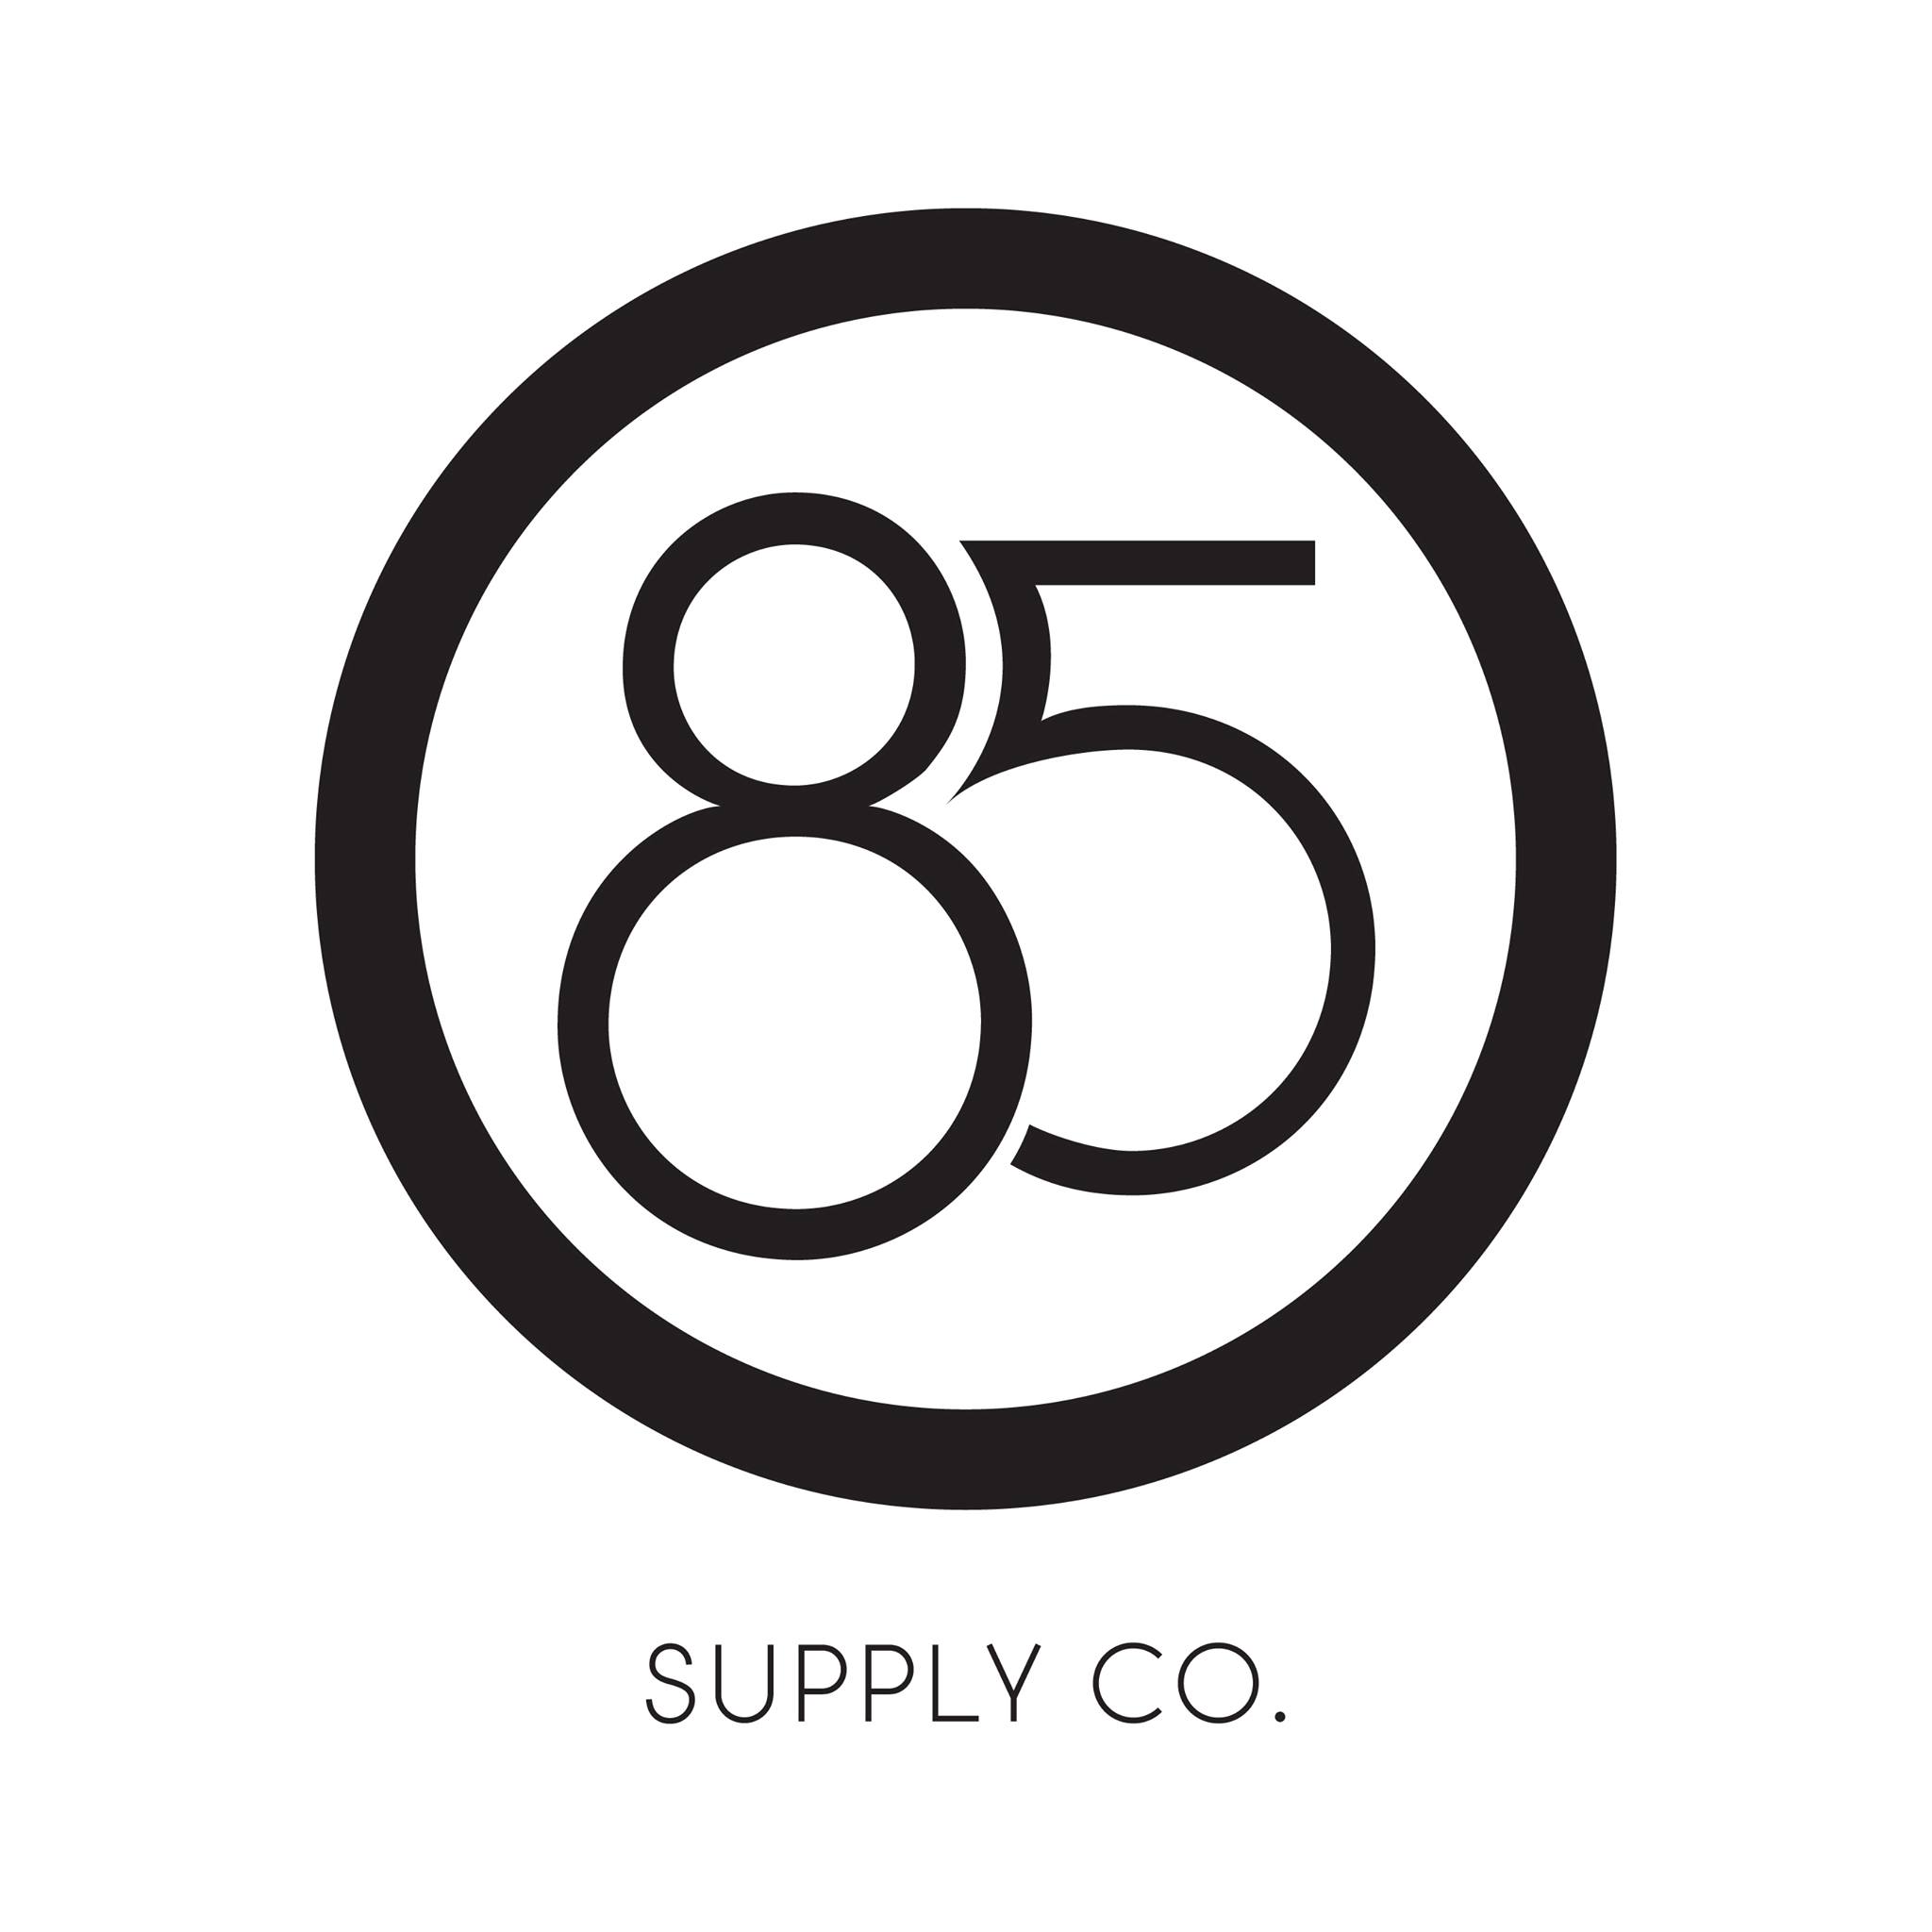 85 Supply